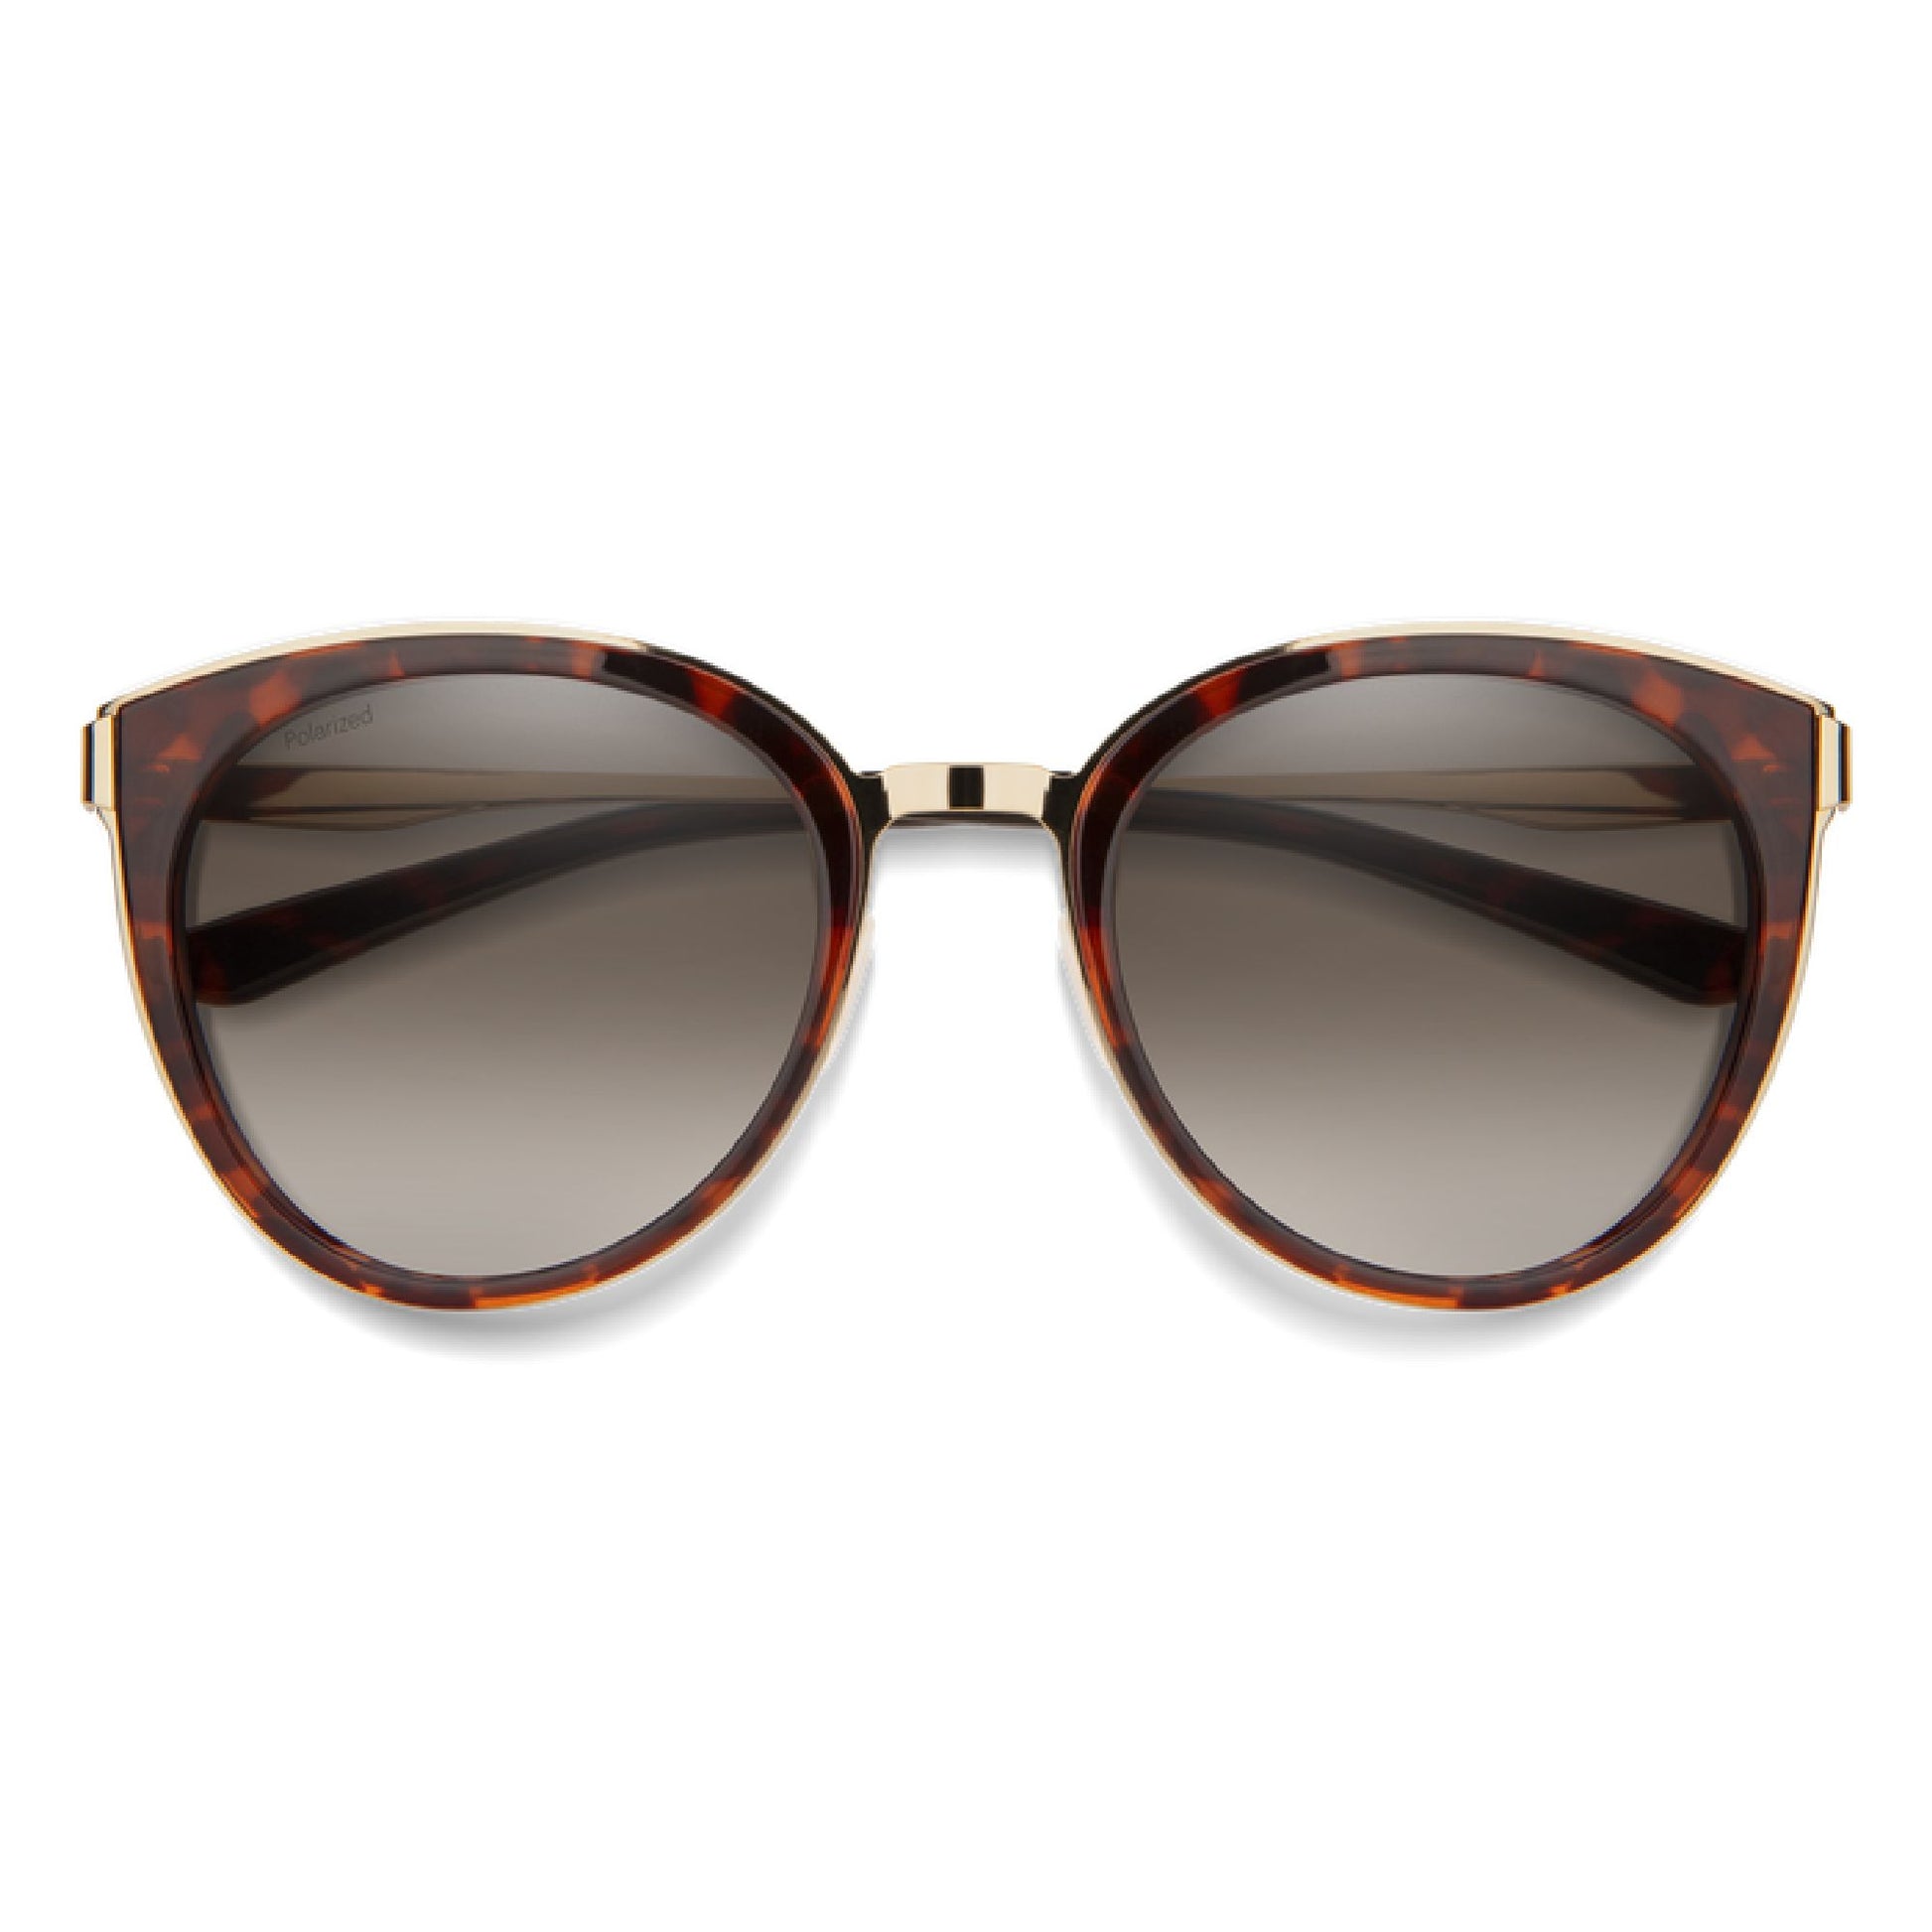 Smith Somerset Sunglasses Tortoise Polarized Brown Gradient Lens Sunglasses